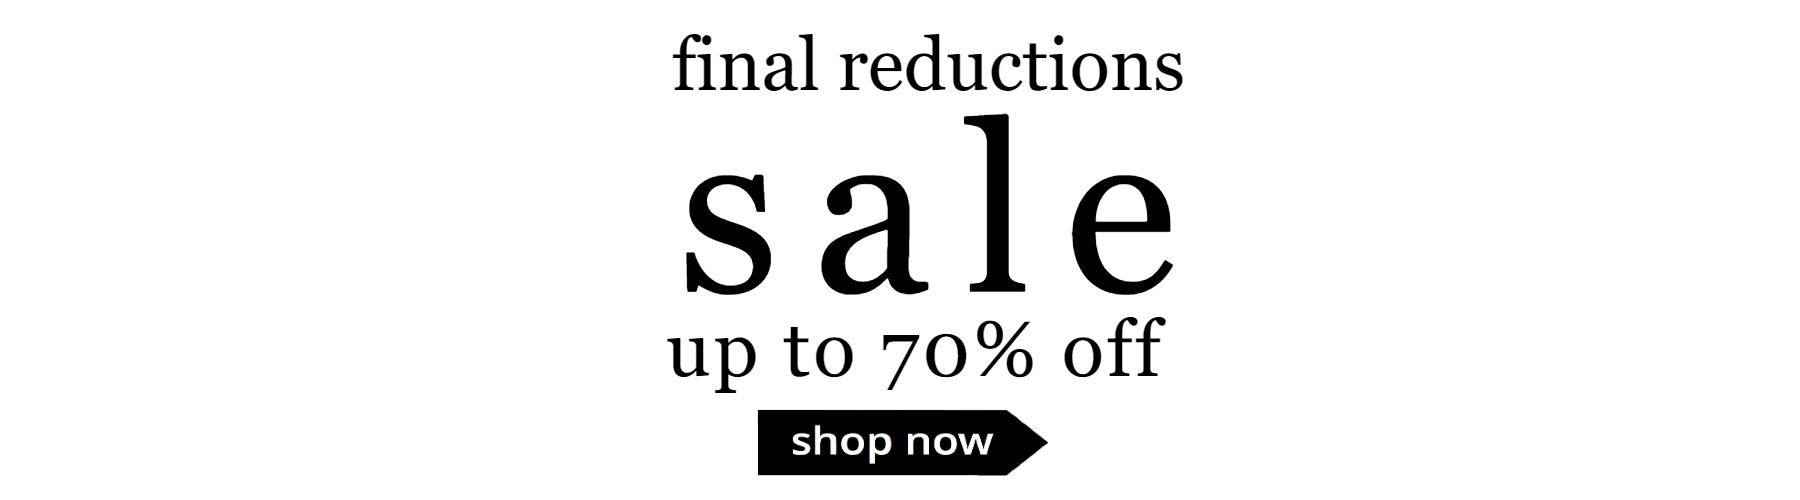 Sale final reductions!